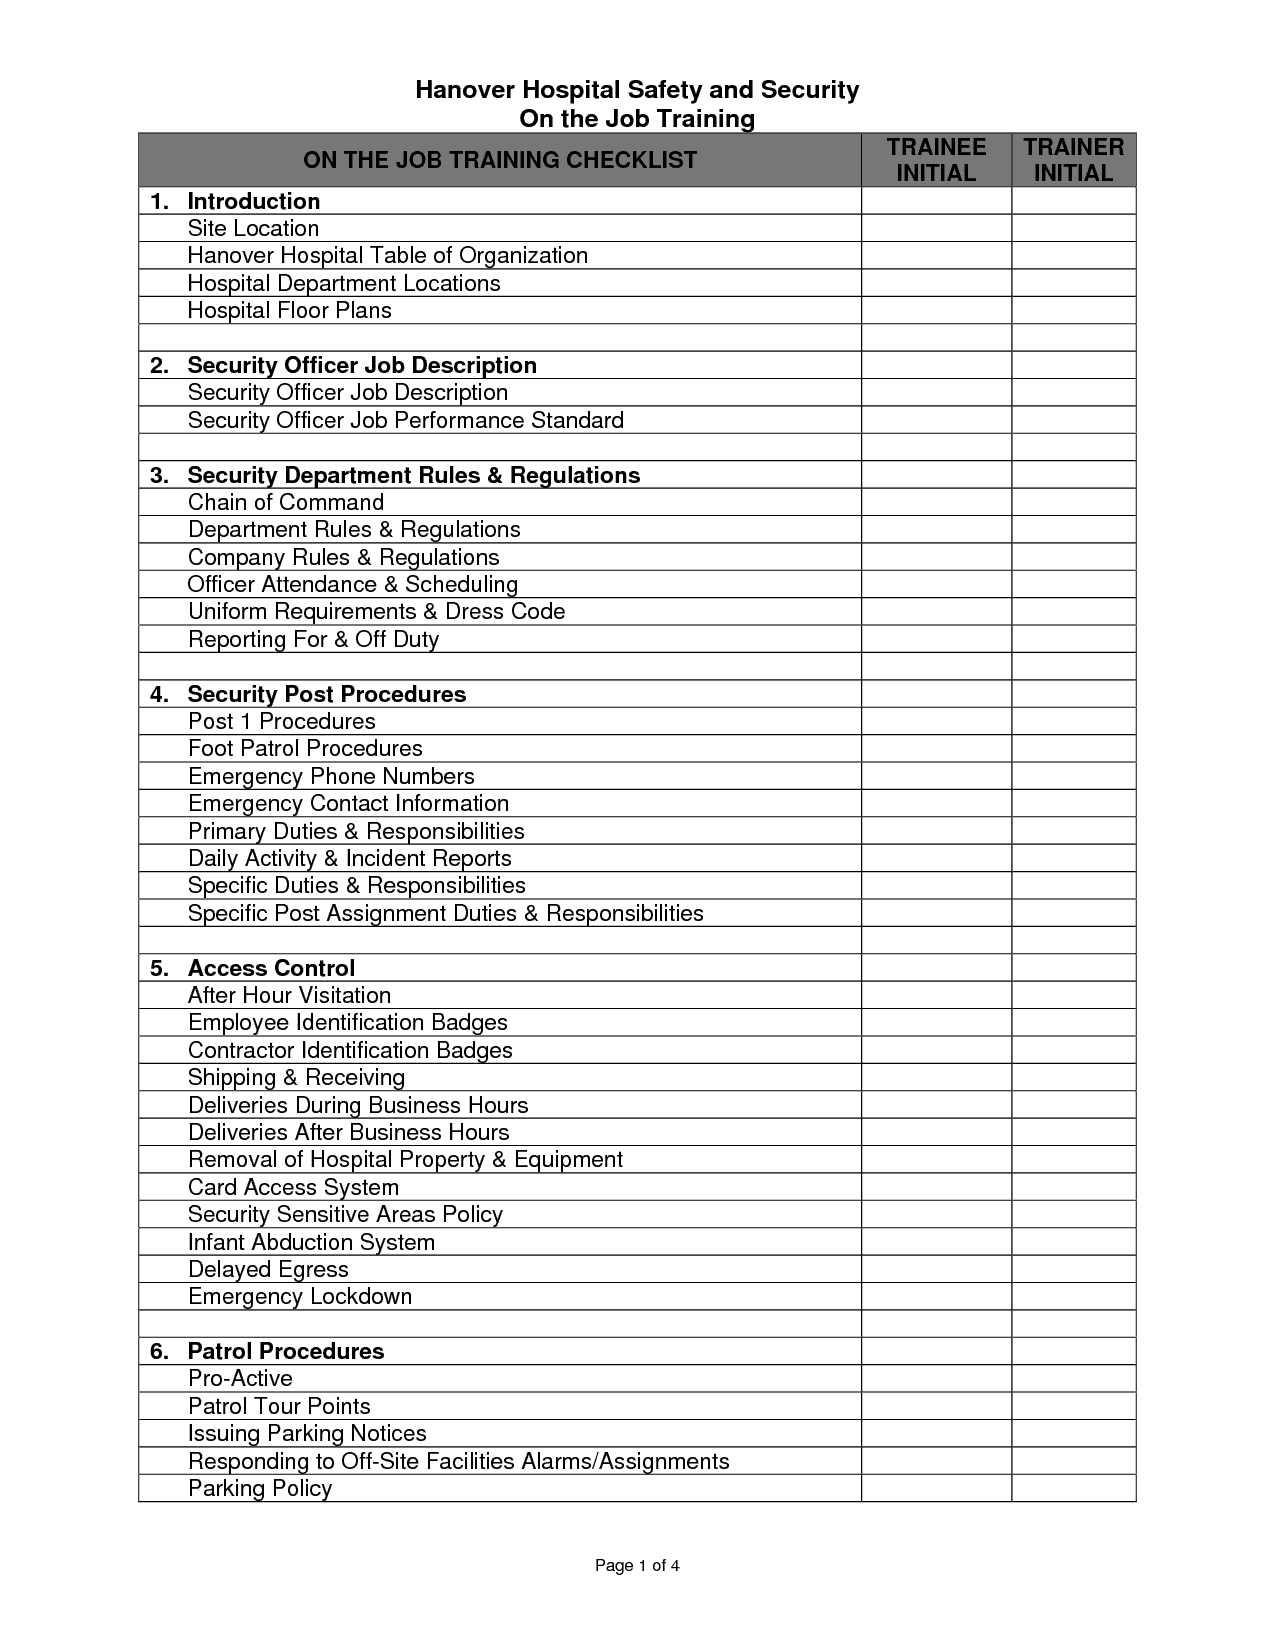 training list template